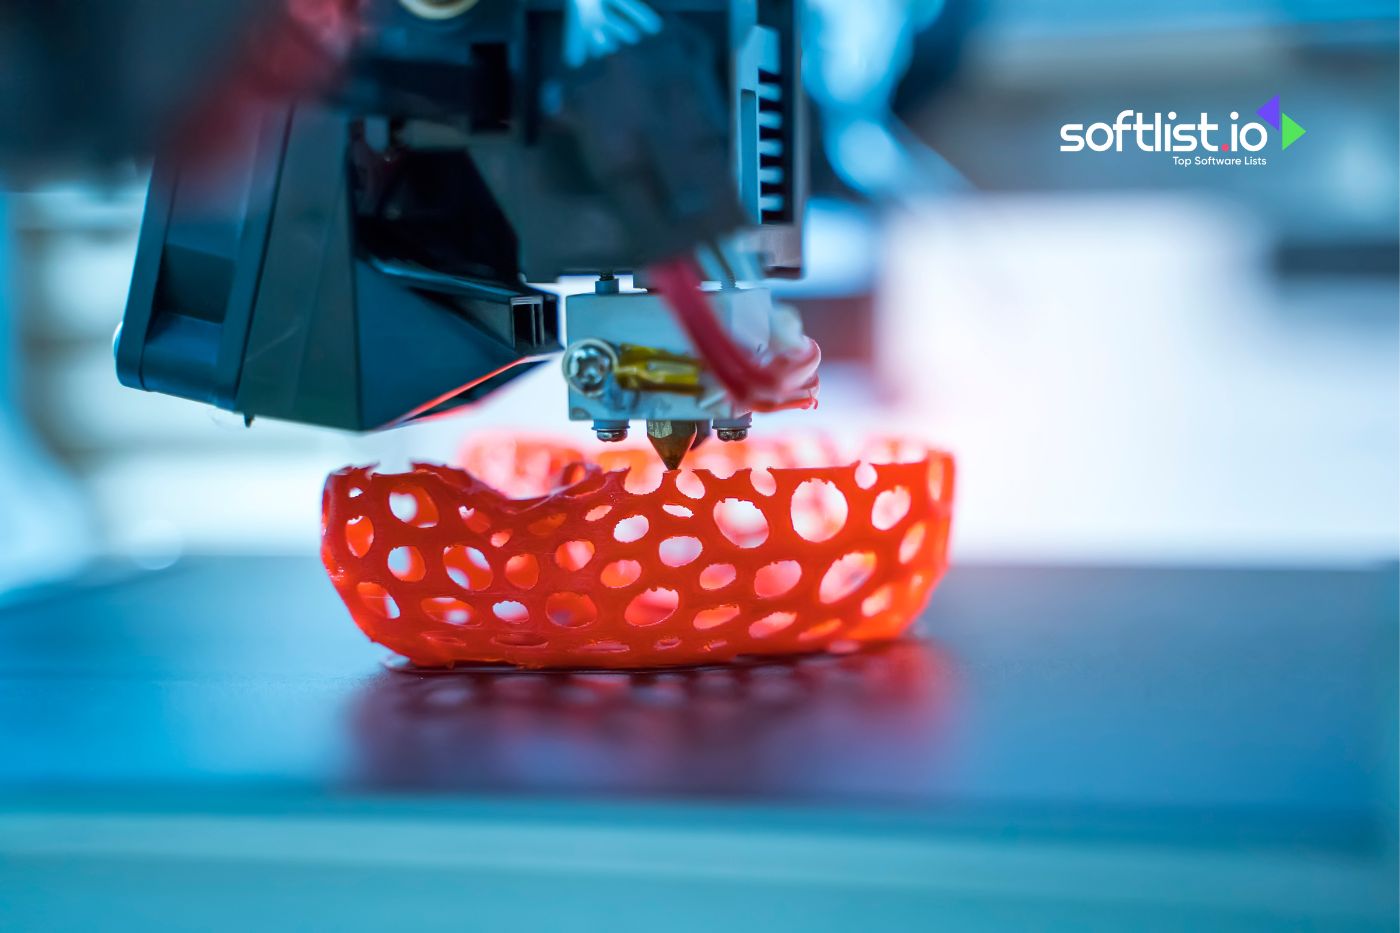 3D printer crafting intricate red bowl